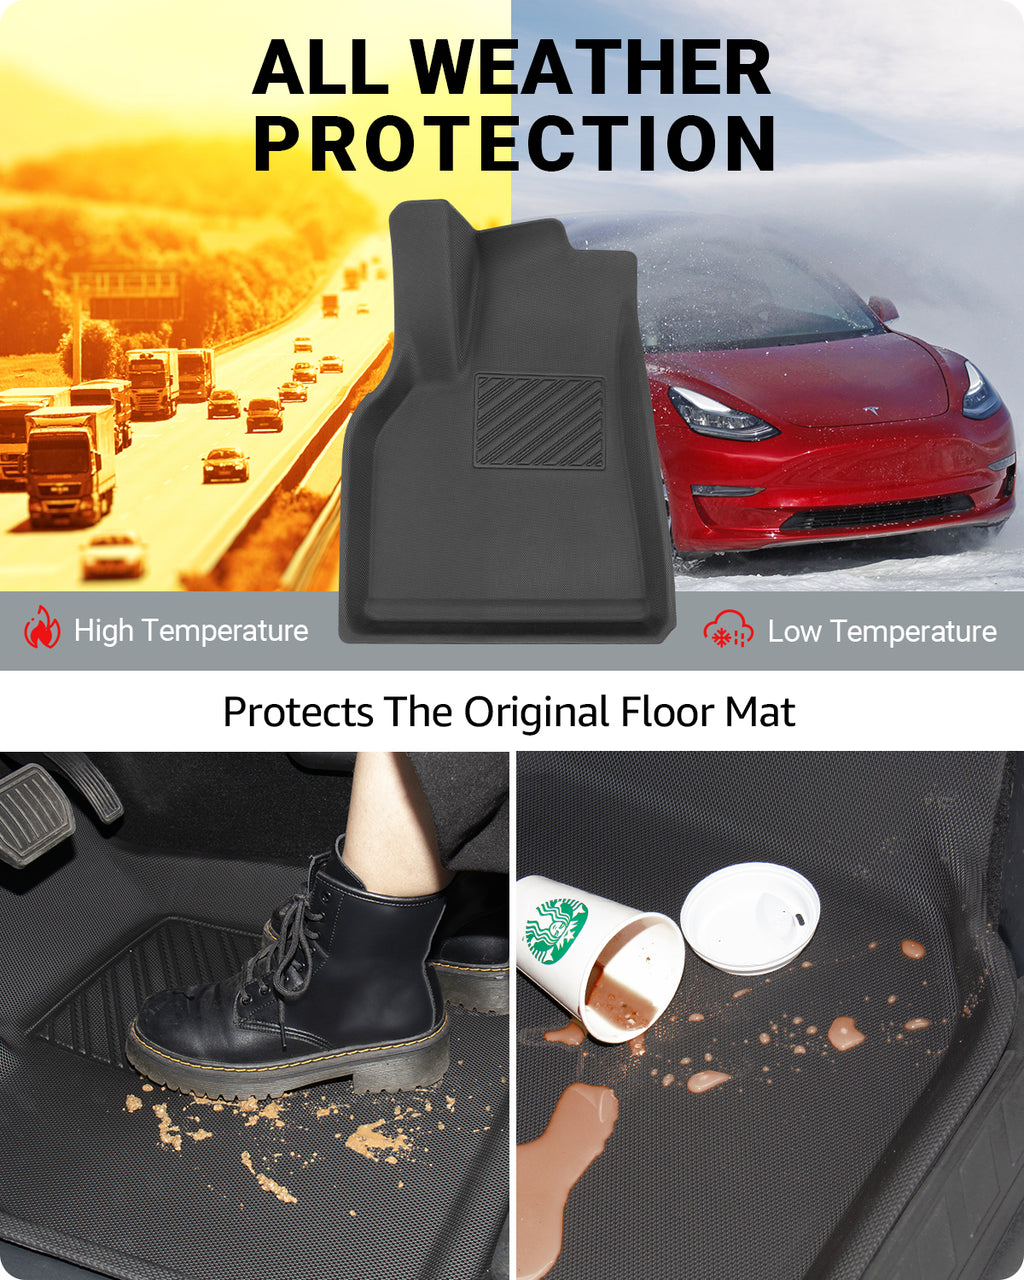 BASENOR Tesla Model Y Floor Mats 3D All-Protection Waterproof